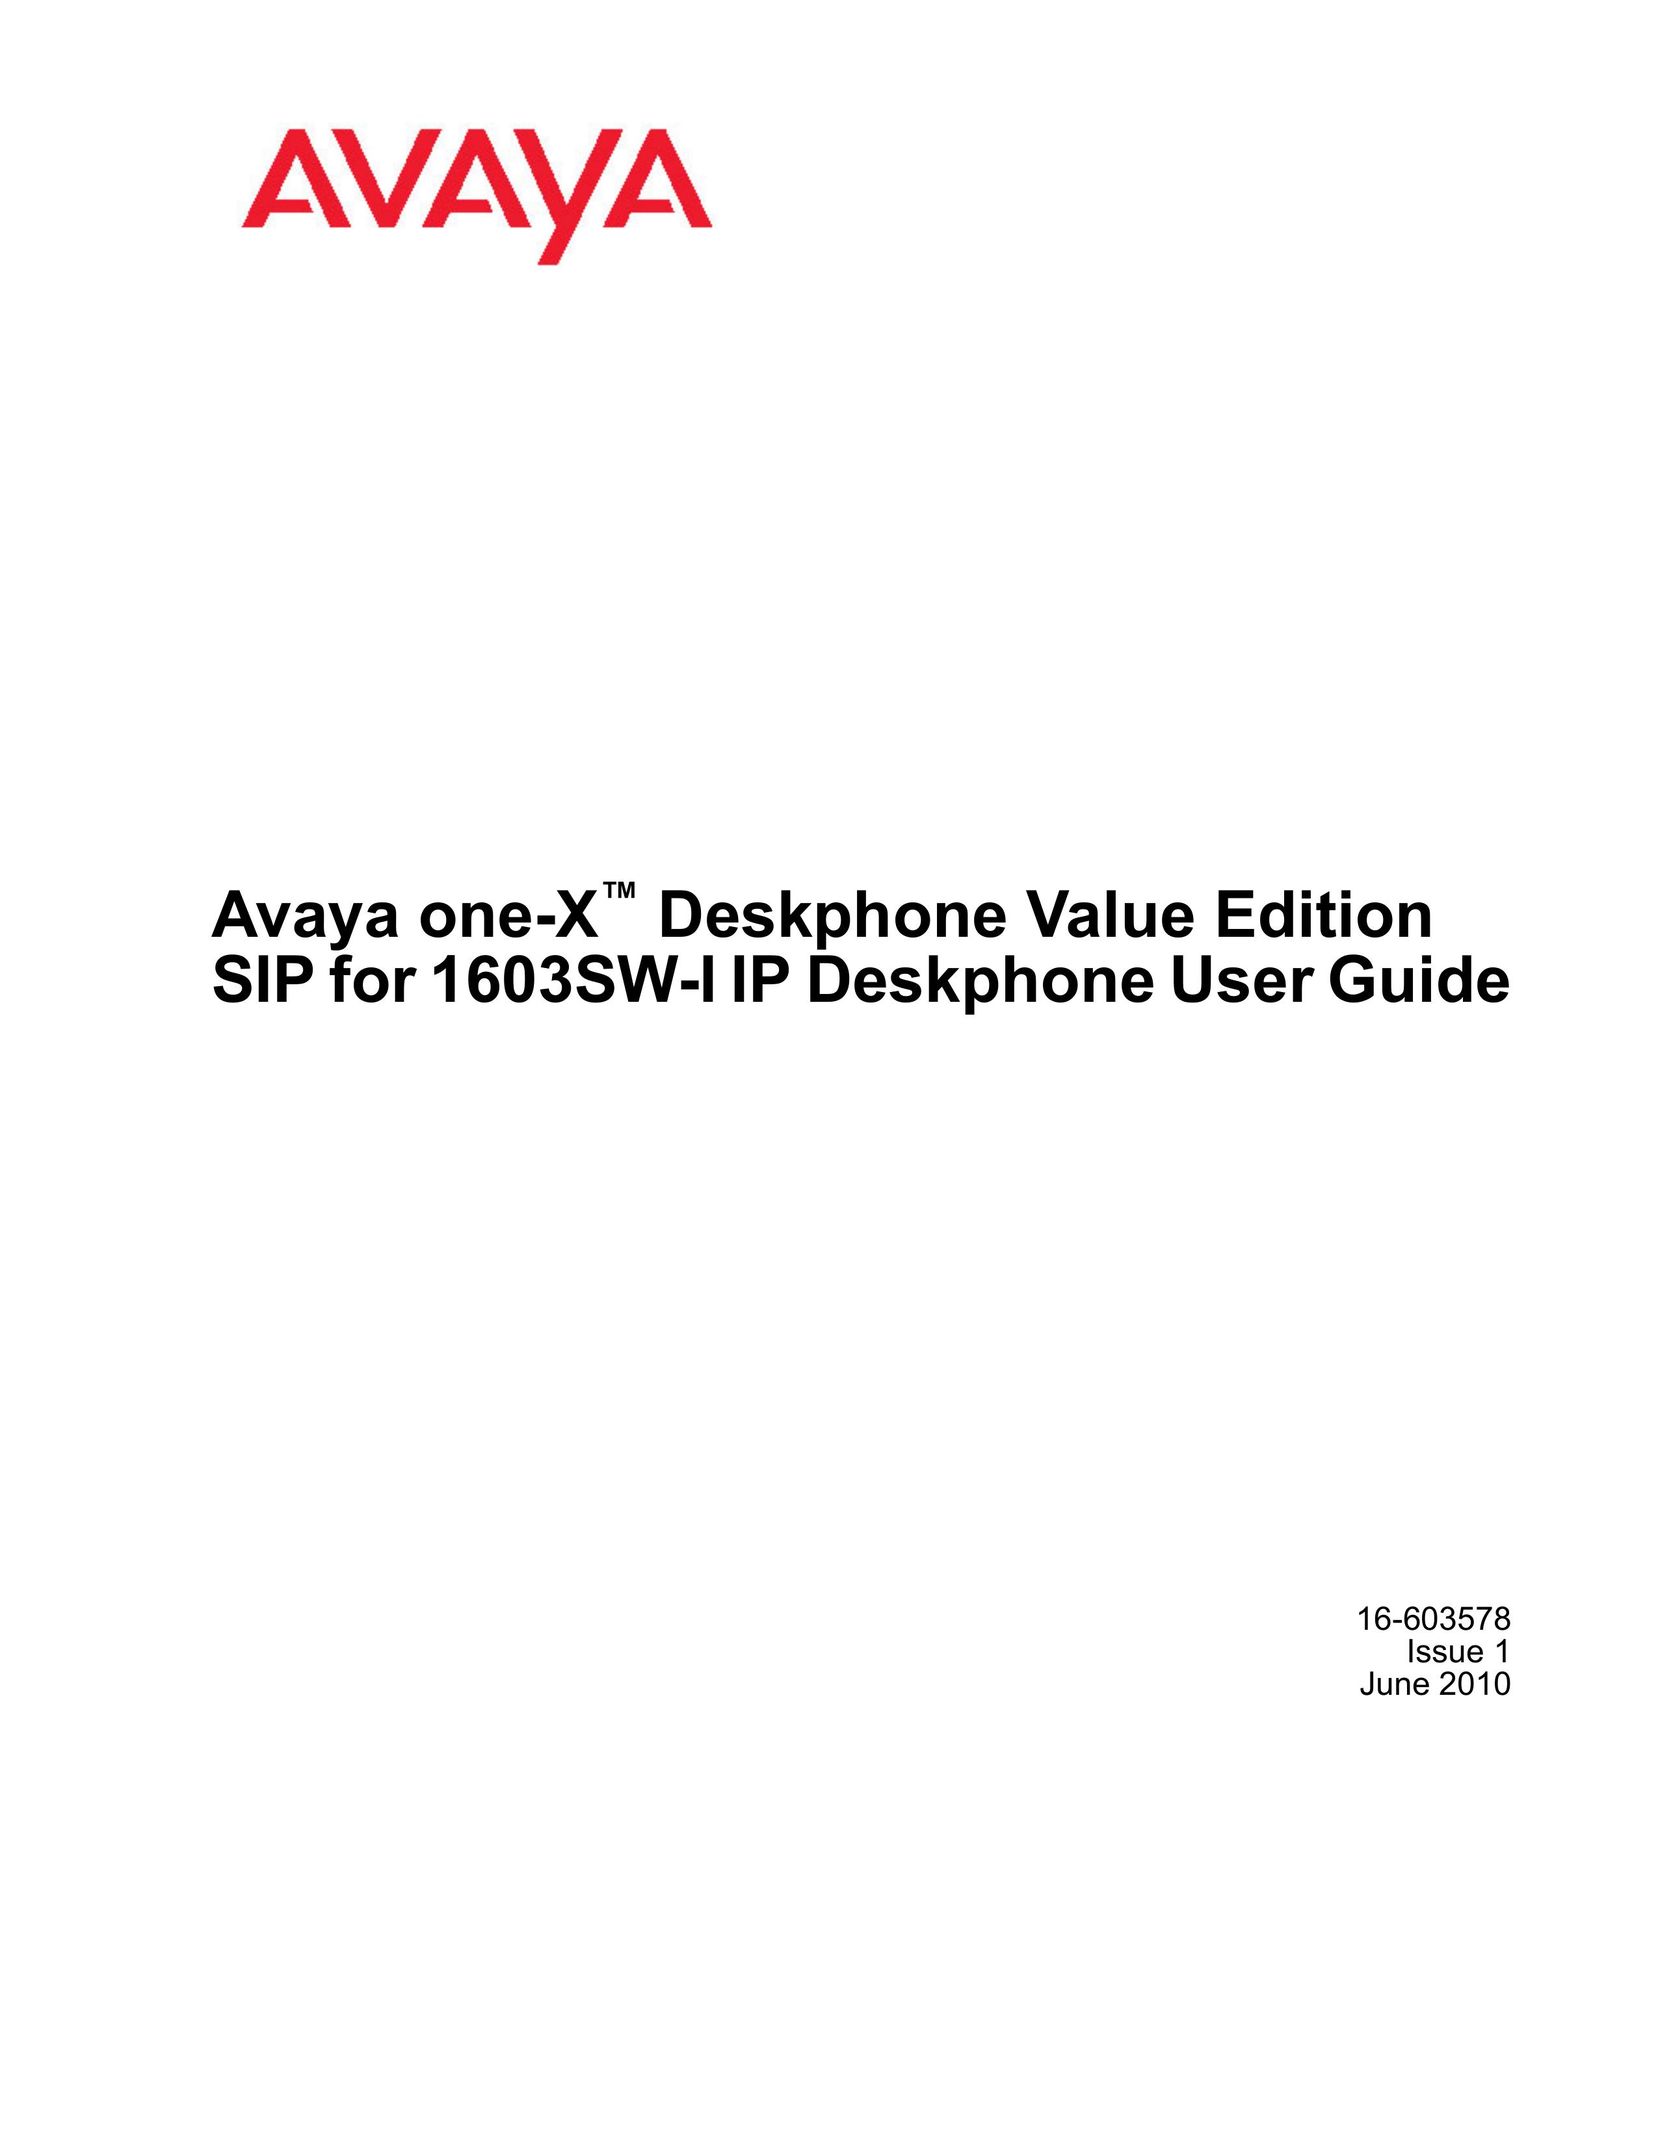 Avaya 16-603578 Telephone User Manual